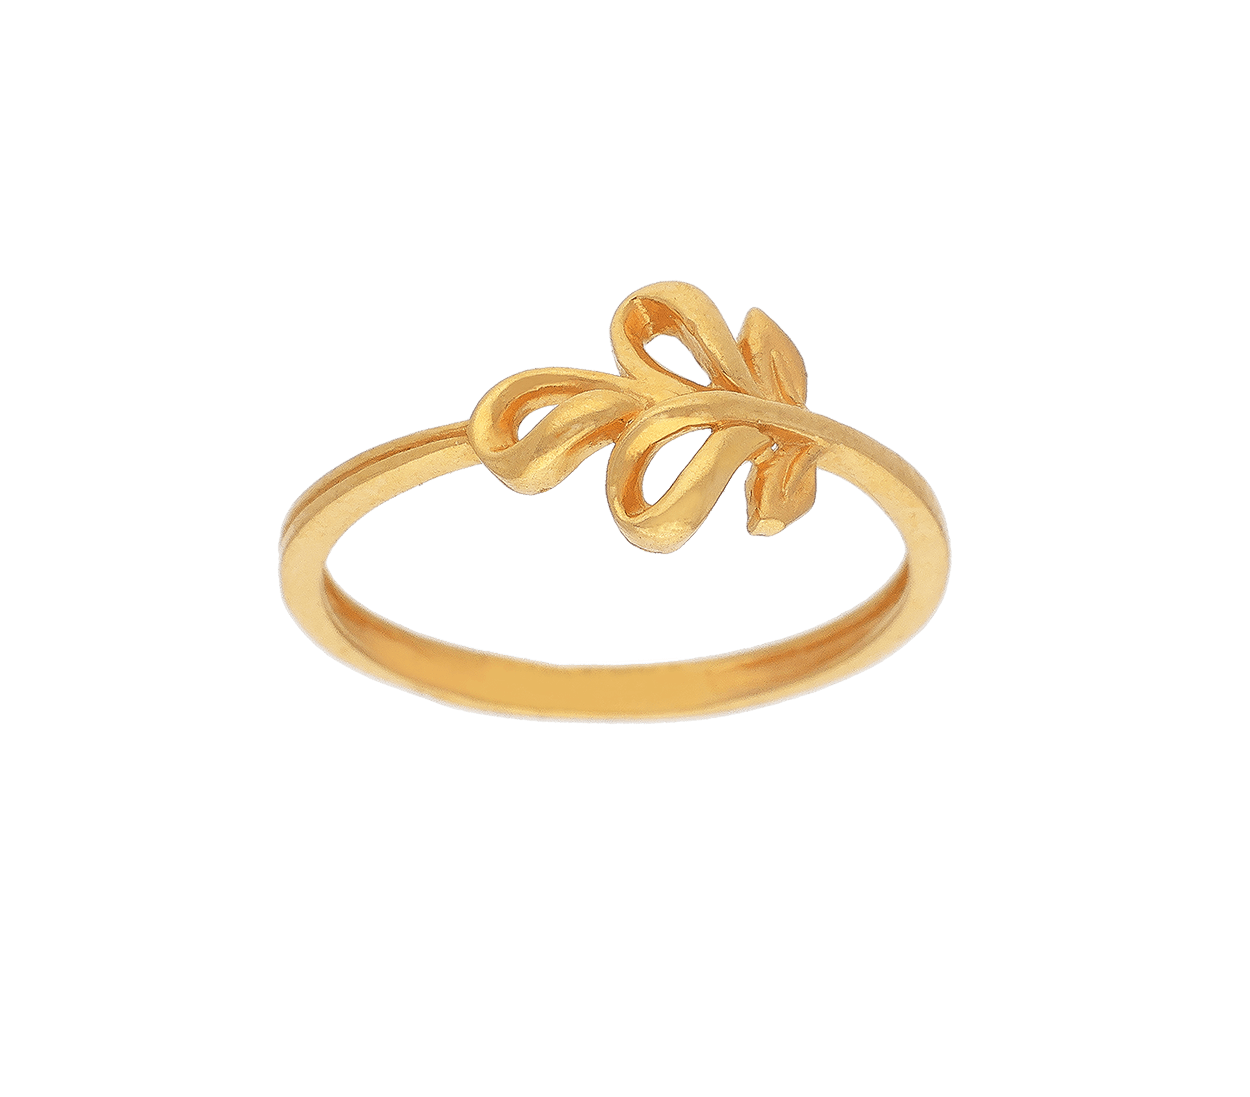 👌👌Latest gold stone ring designs for men👌👌 - YouTube